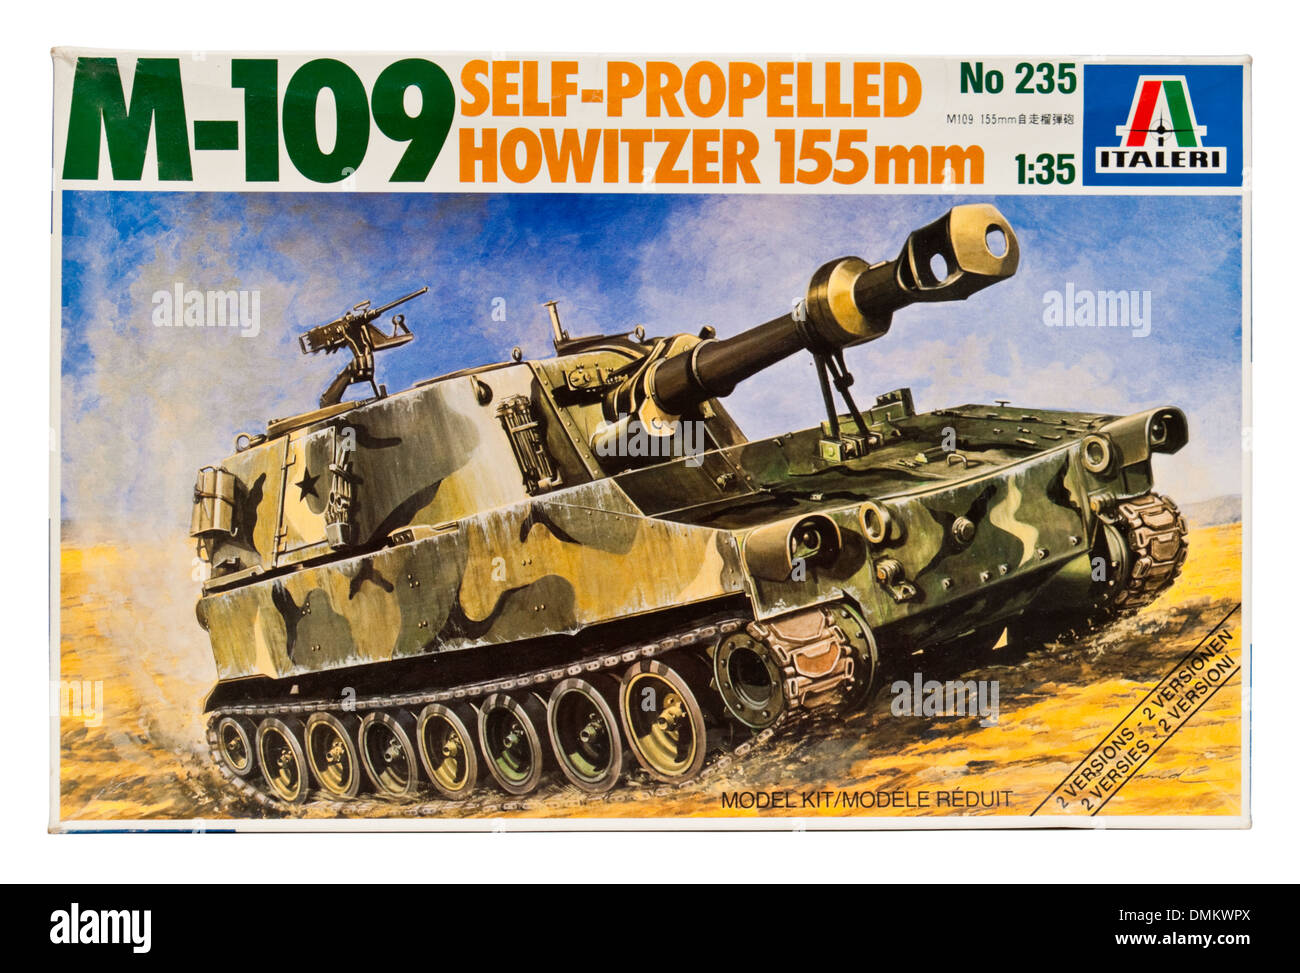 M-109 Self-Propelled Howitzer 155mm tank (Italeri No 235 model kit, 1:35 scale) Stock Photo